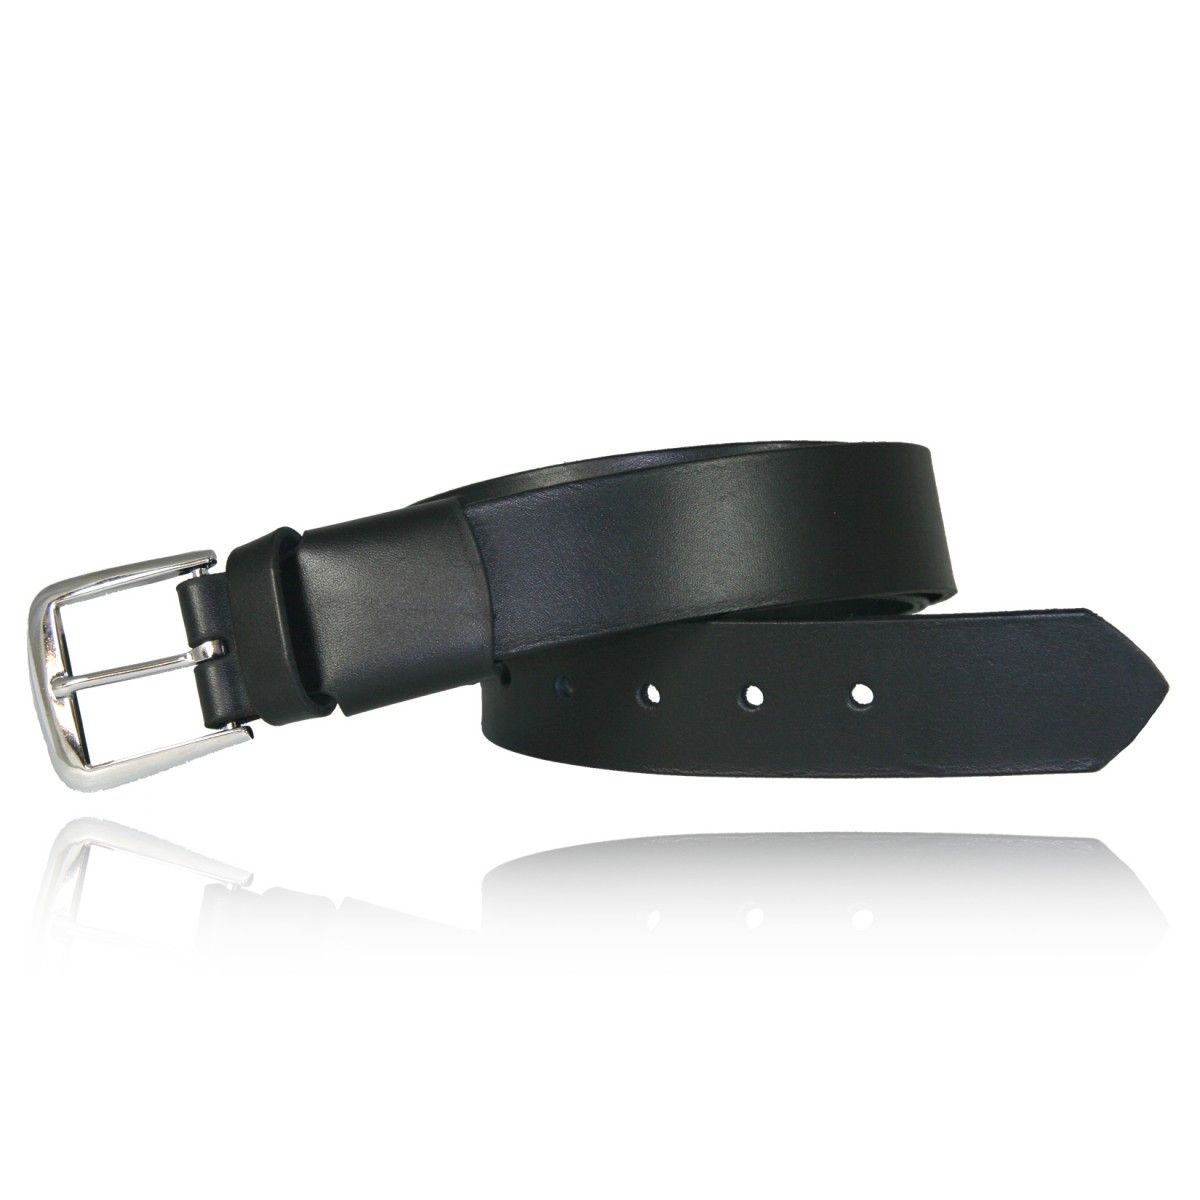 Belts.com 718 Full One Piece Leather Black Work Uniform Utility Belt 1-1/4" Wide